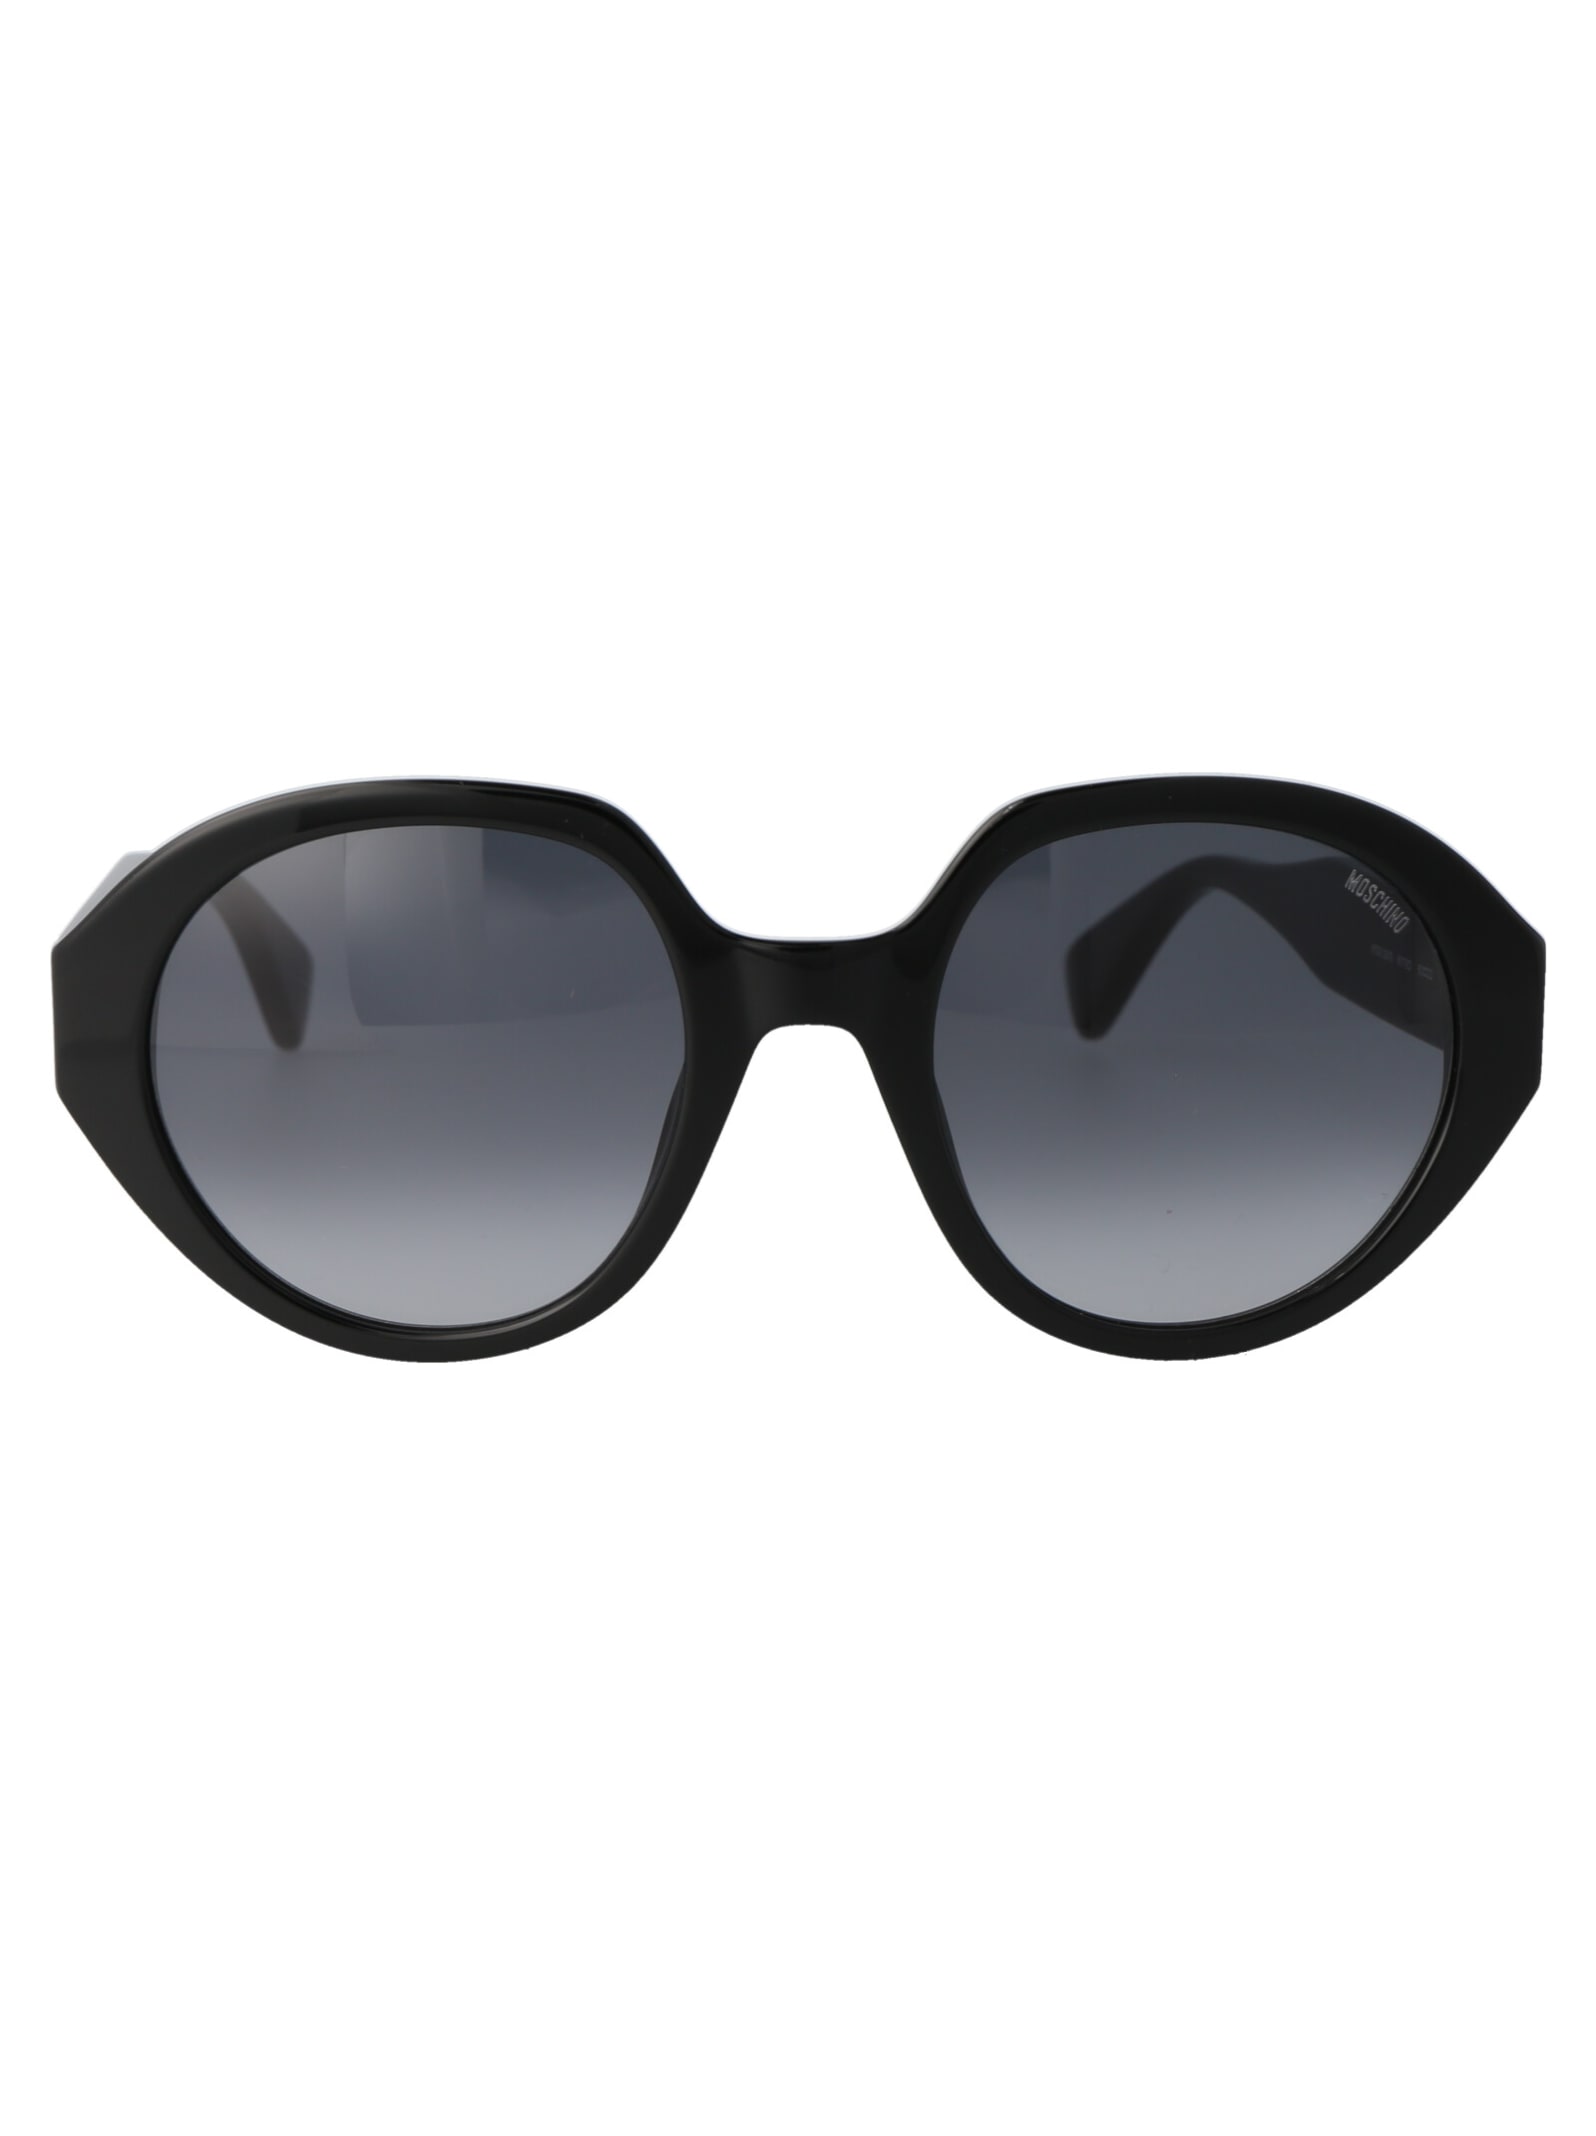 Mos126/s Sunglasses